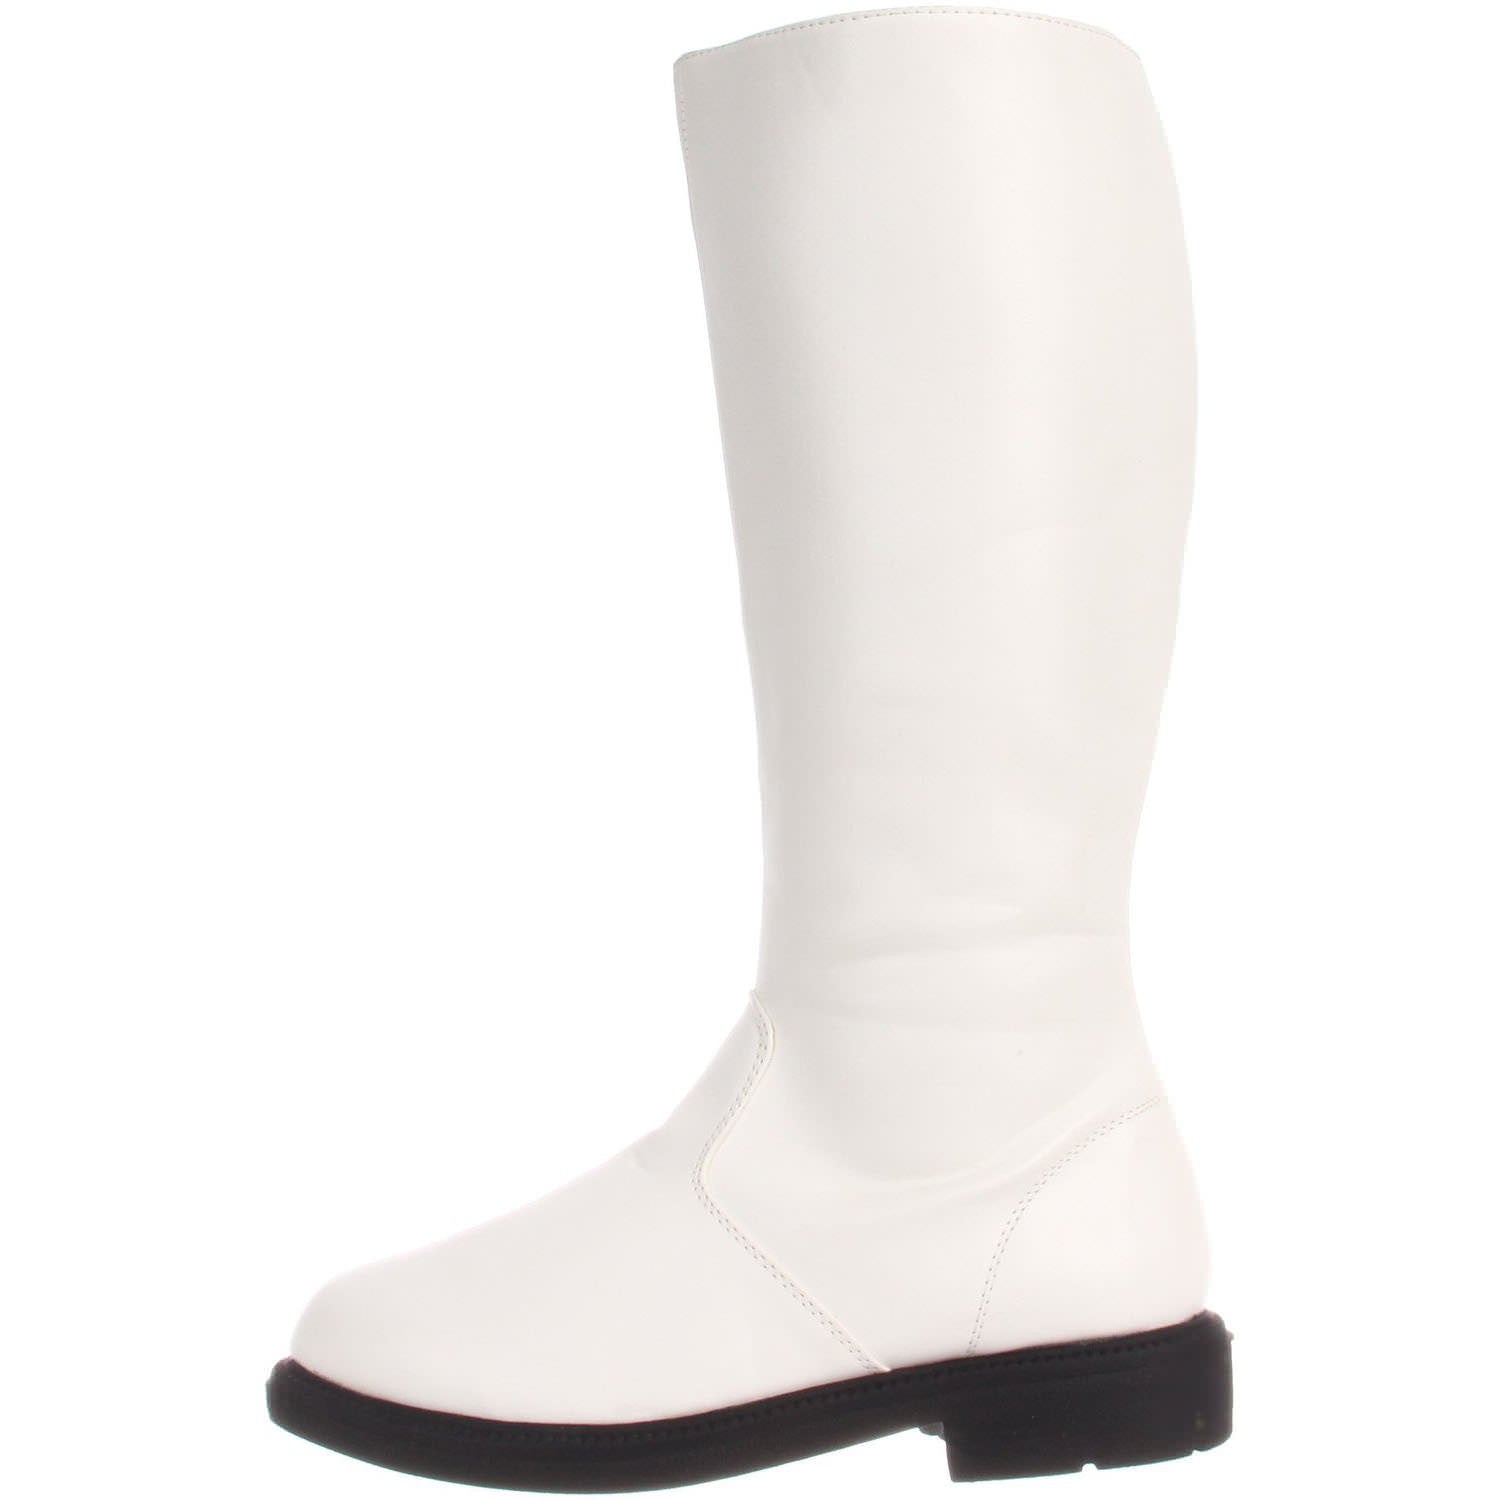 Men's White Knee High Stormtrooper Boots - Shoecup.com - 5